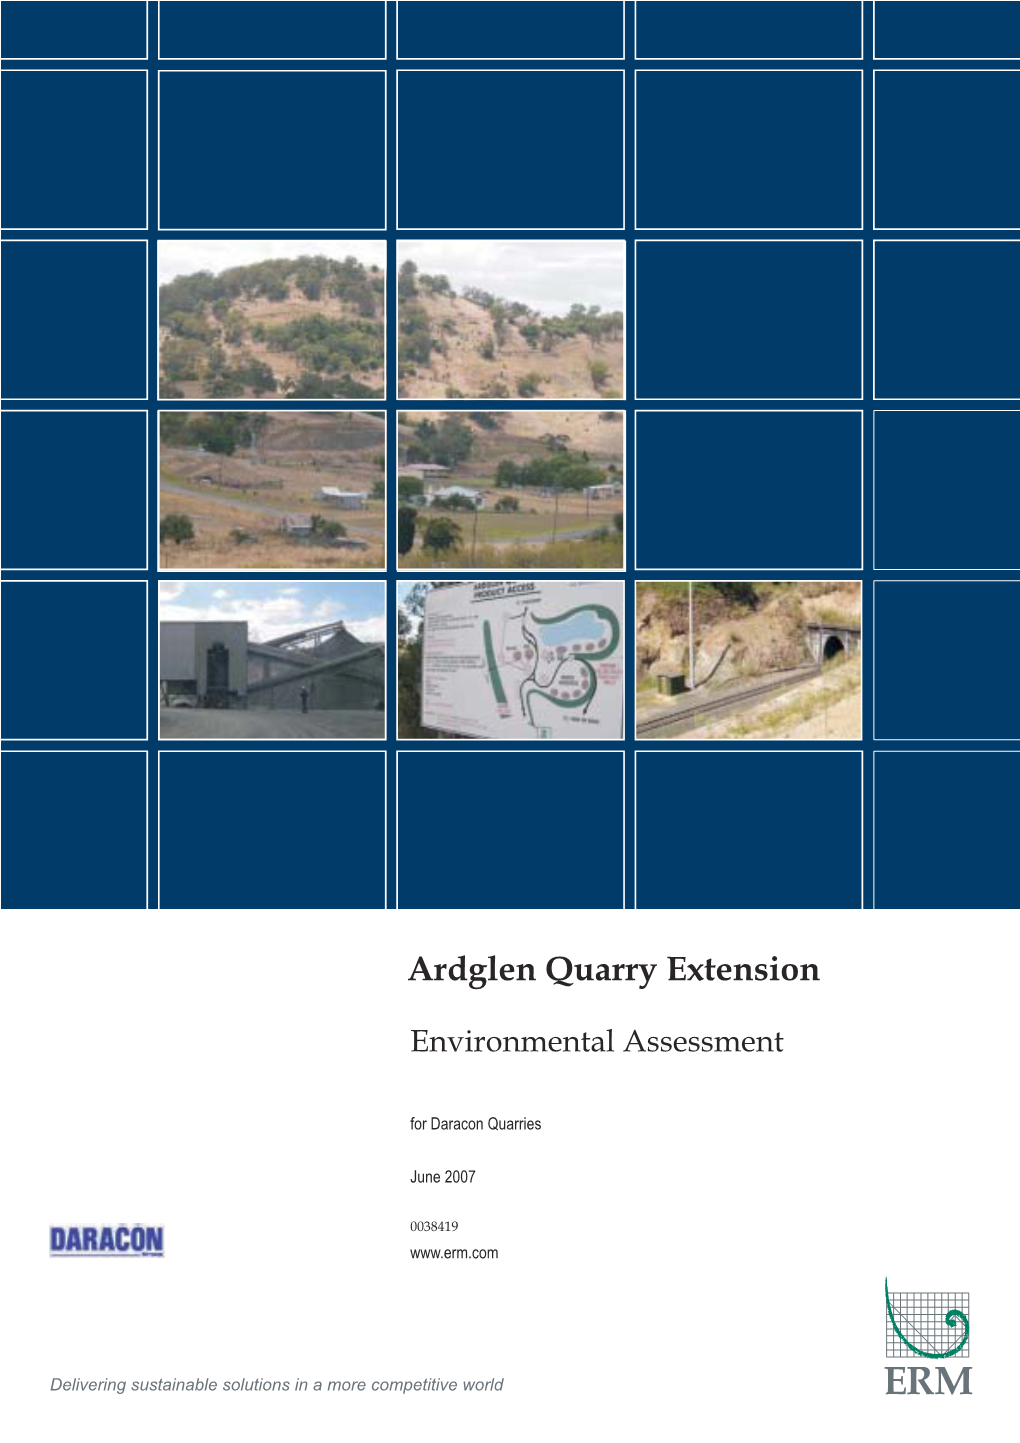 Ardglen Quarry Extension